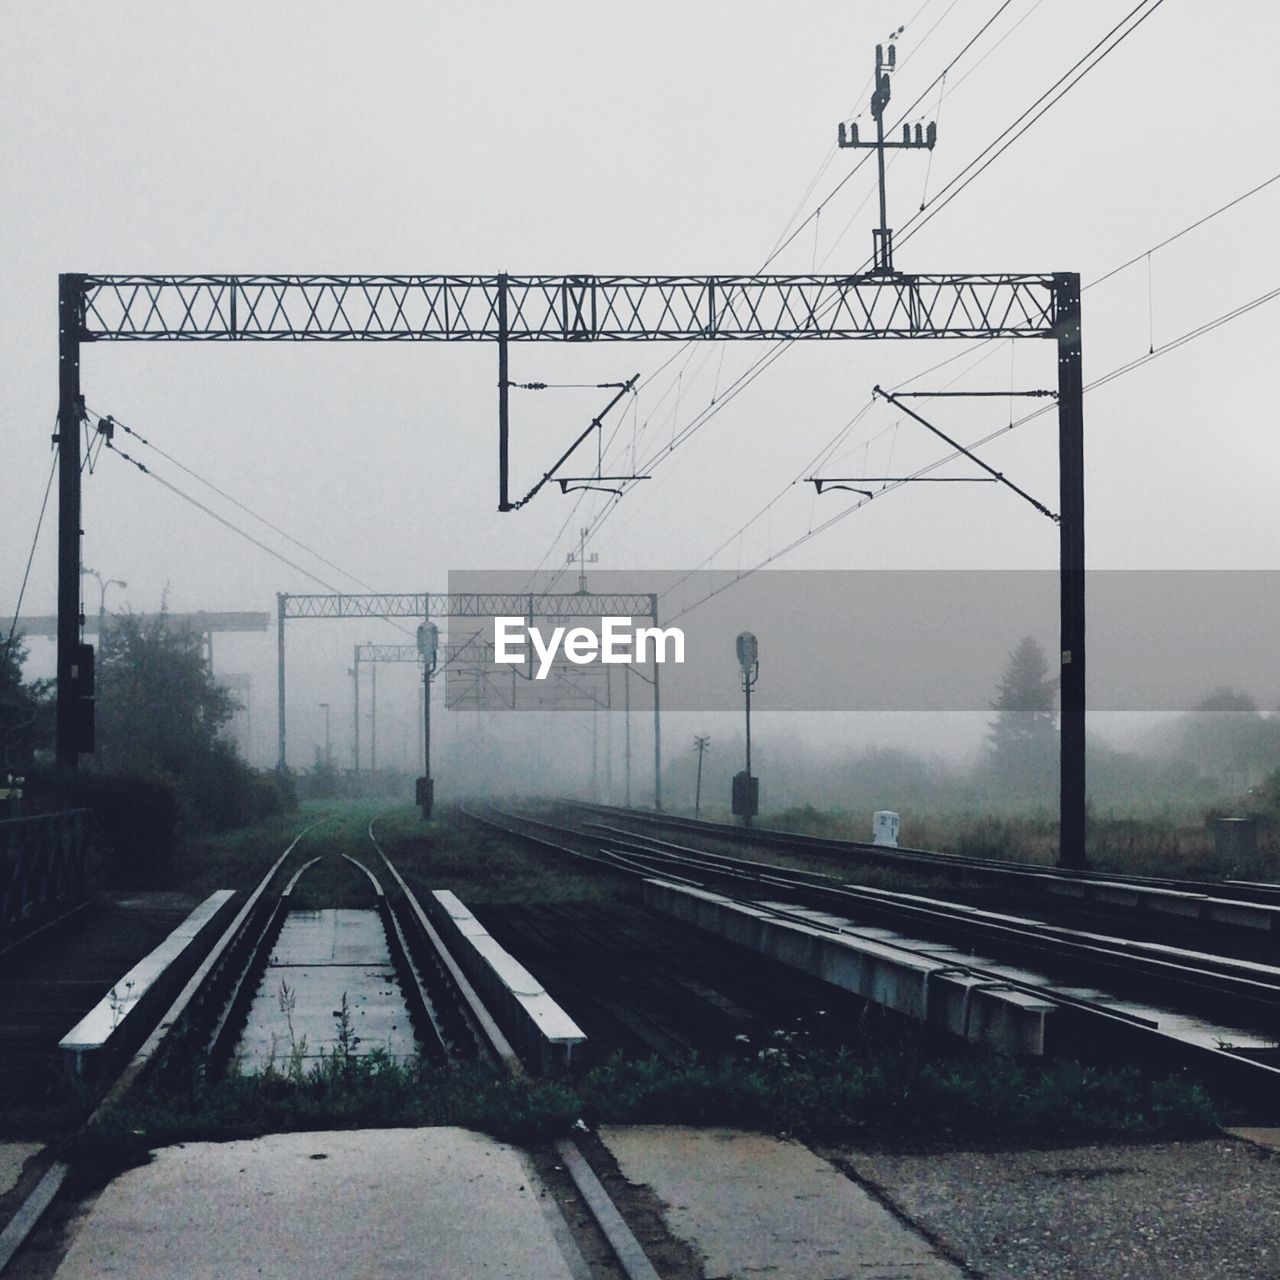 Railroad tracks in foggy weather